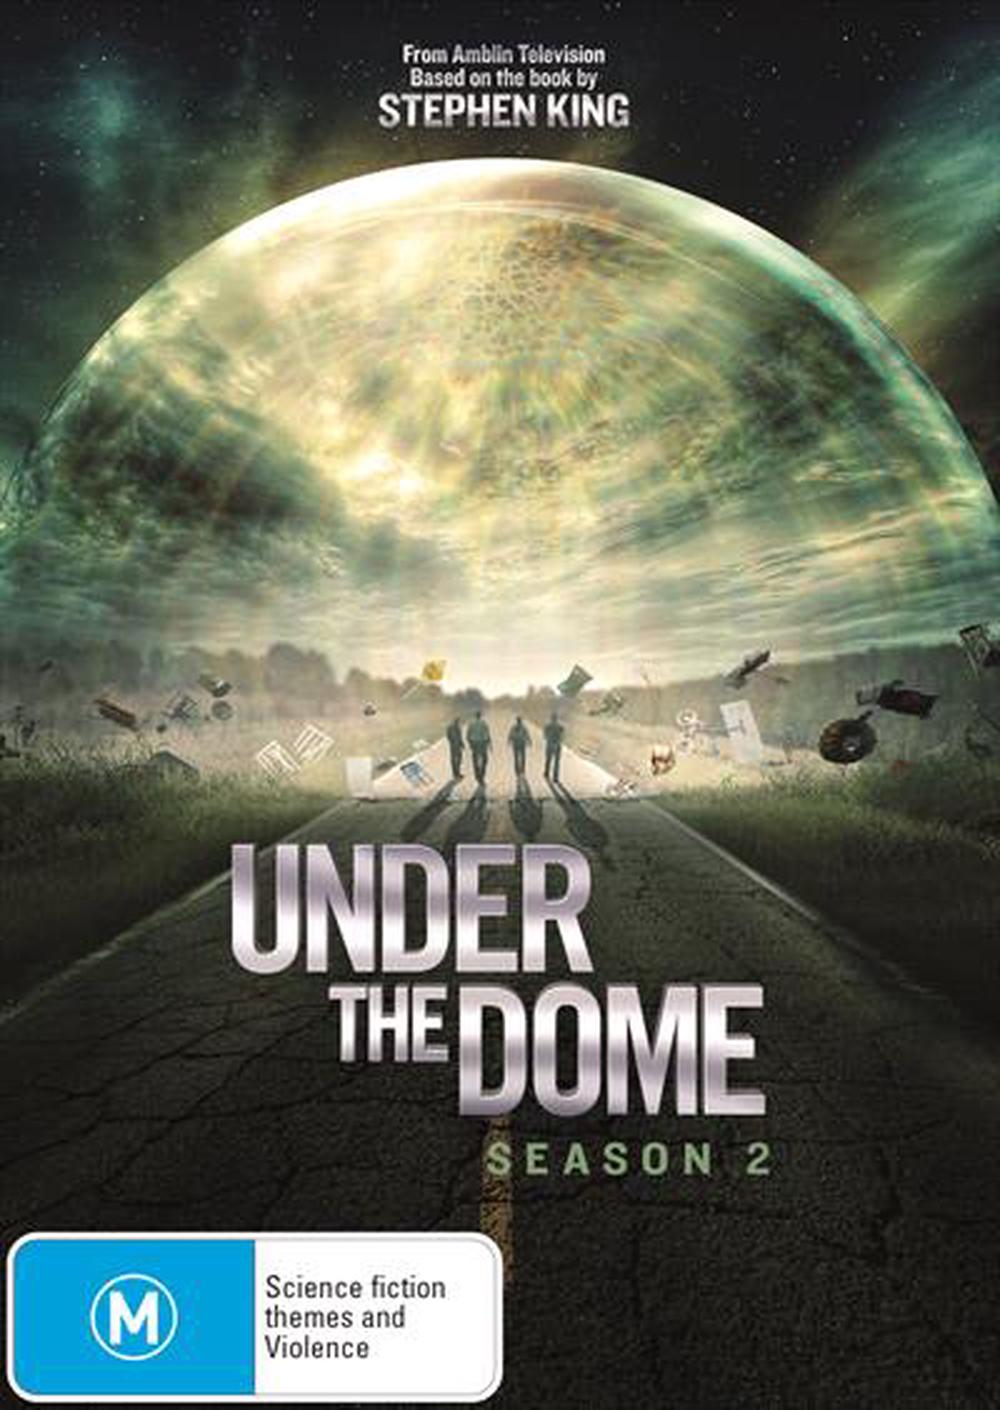 regular show season 7 dome